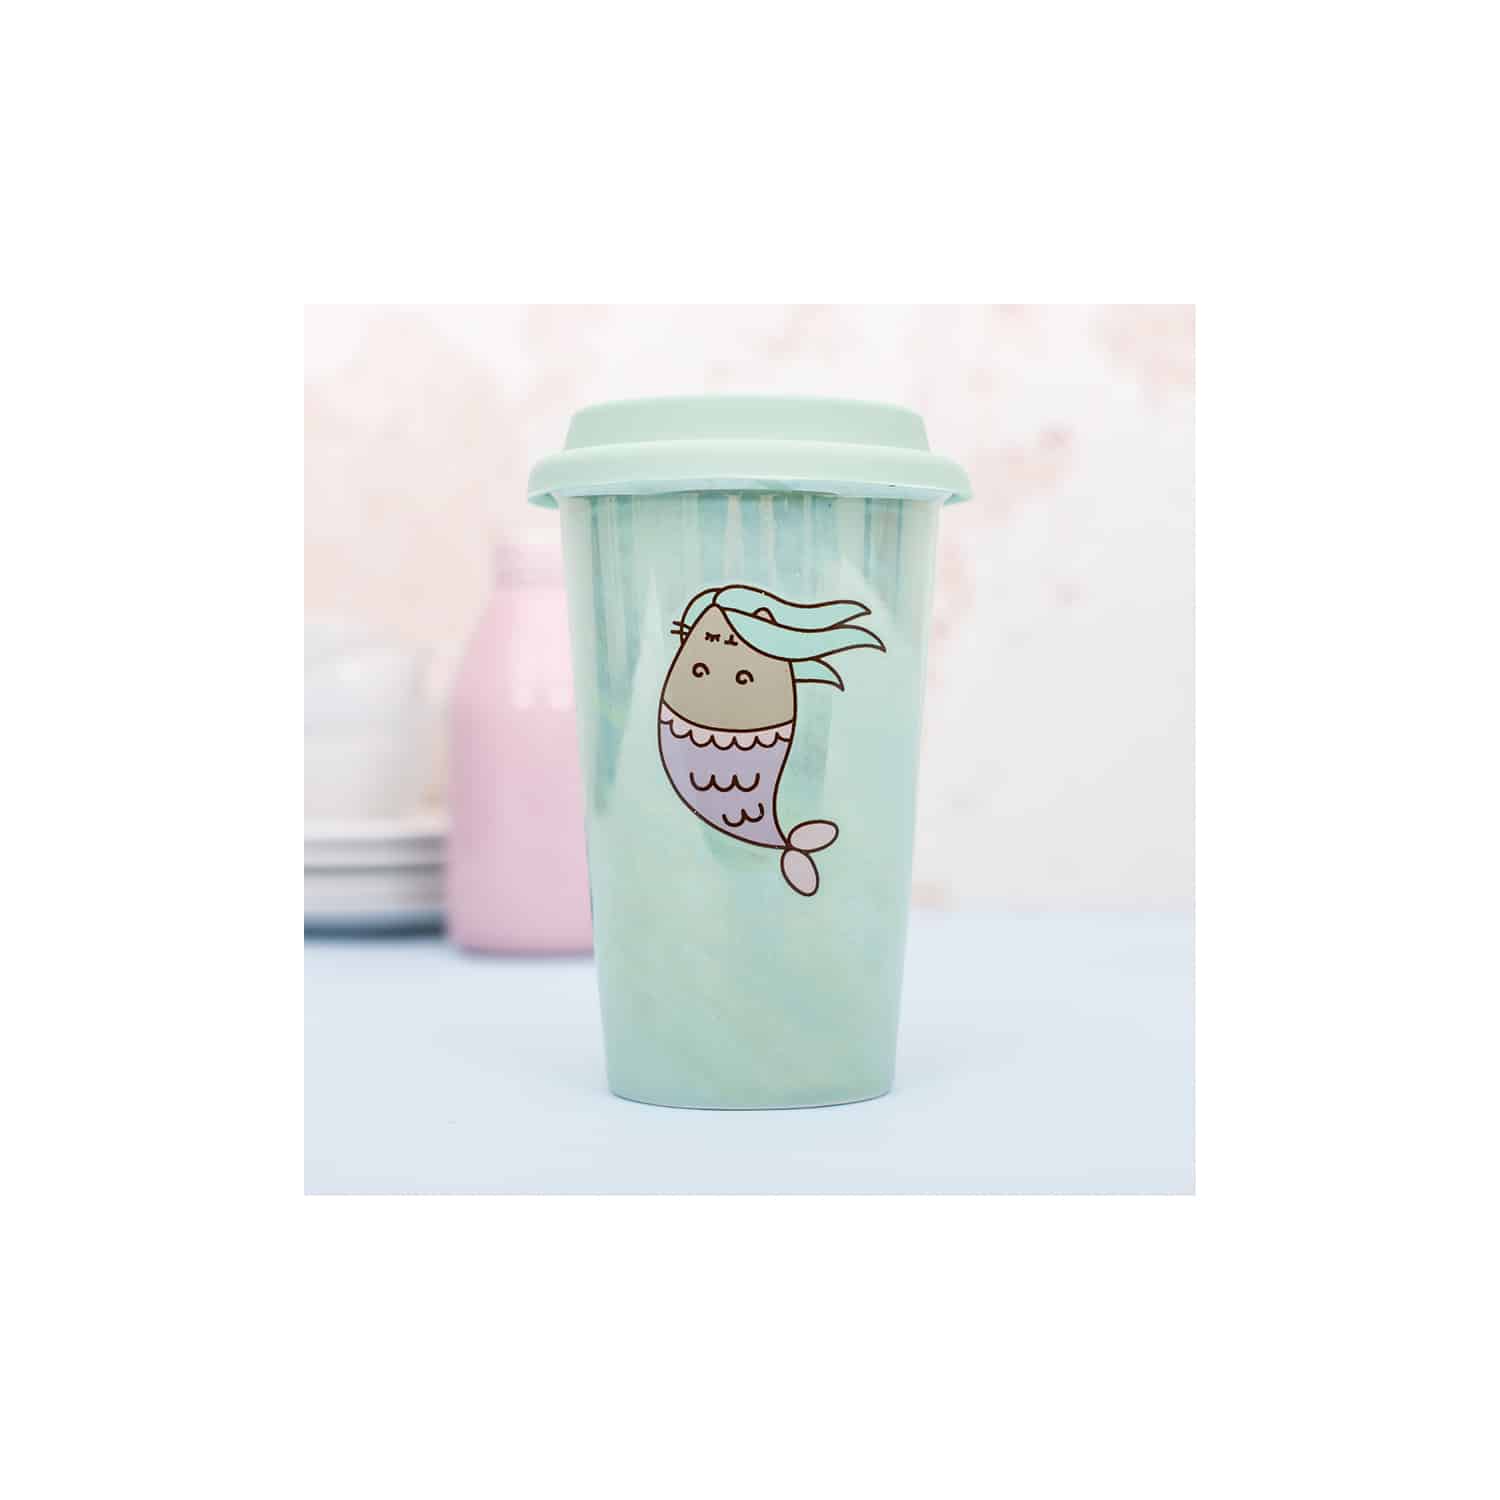 pusheen-mermaid-ceramic-travel-mug